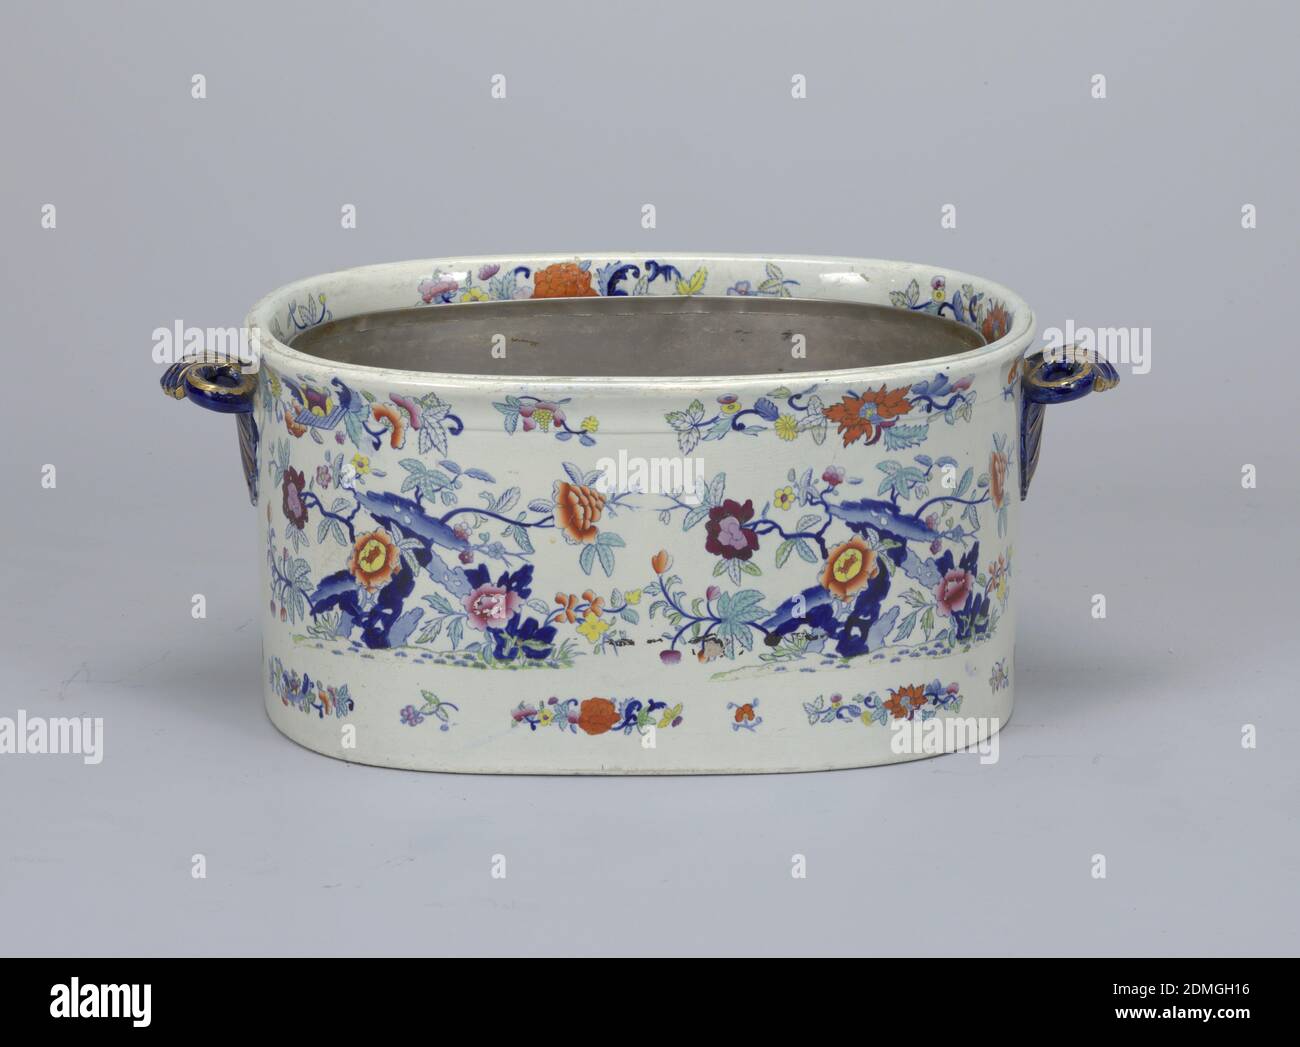 Jardiniere Oval Bowl on Foot Medium Size Decorative Silver Cast Aluminium